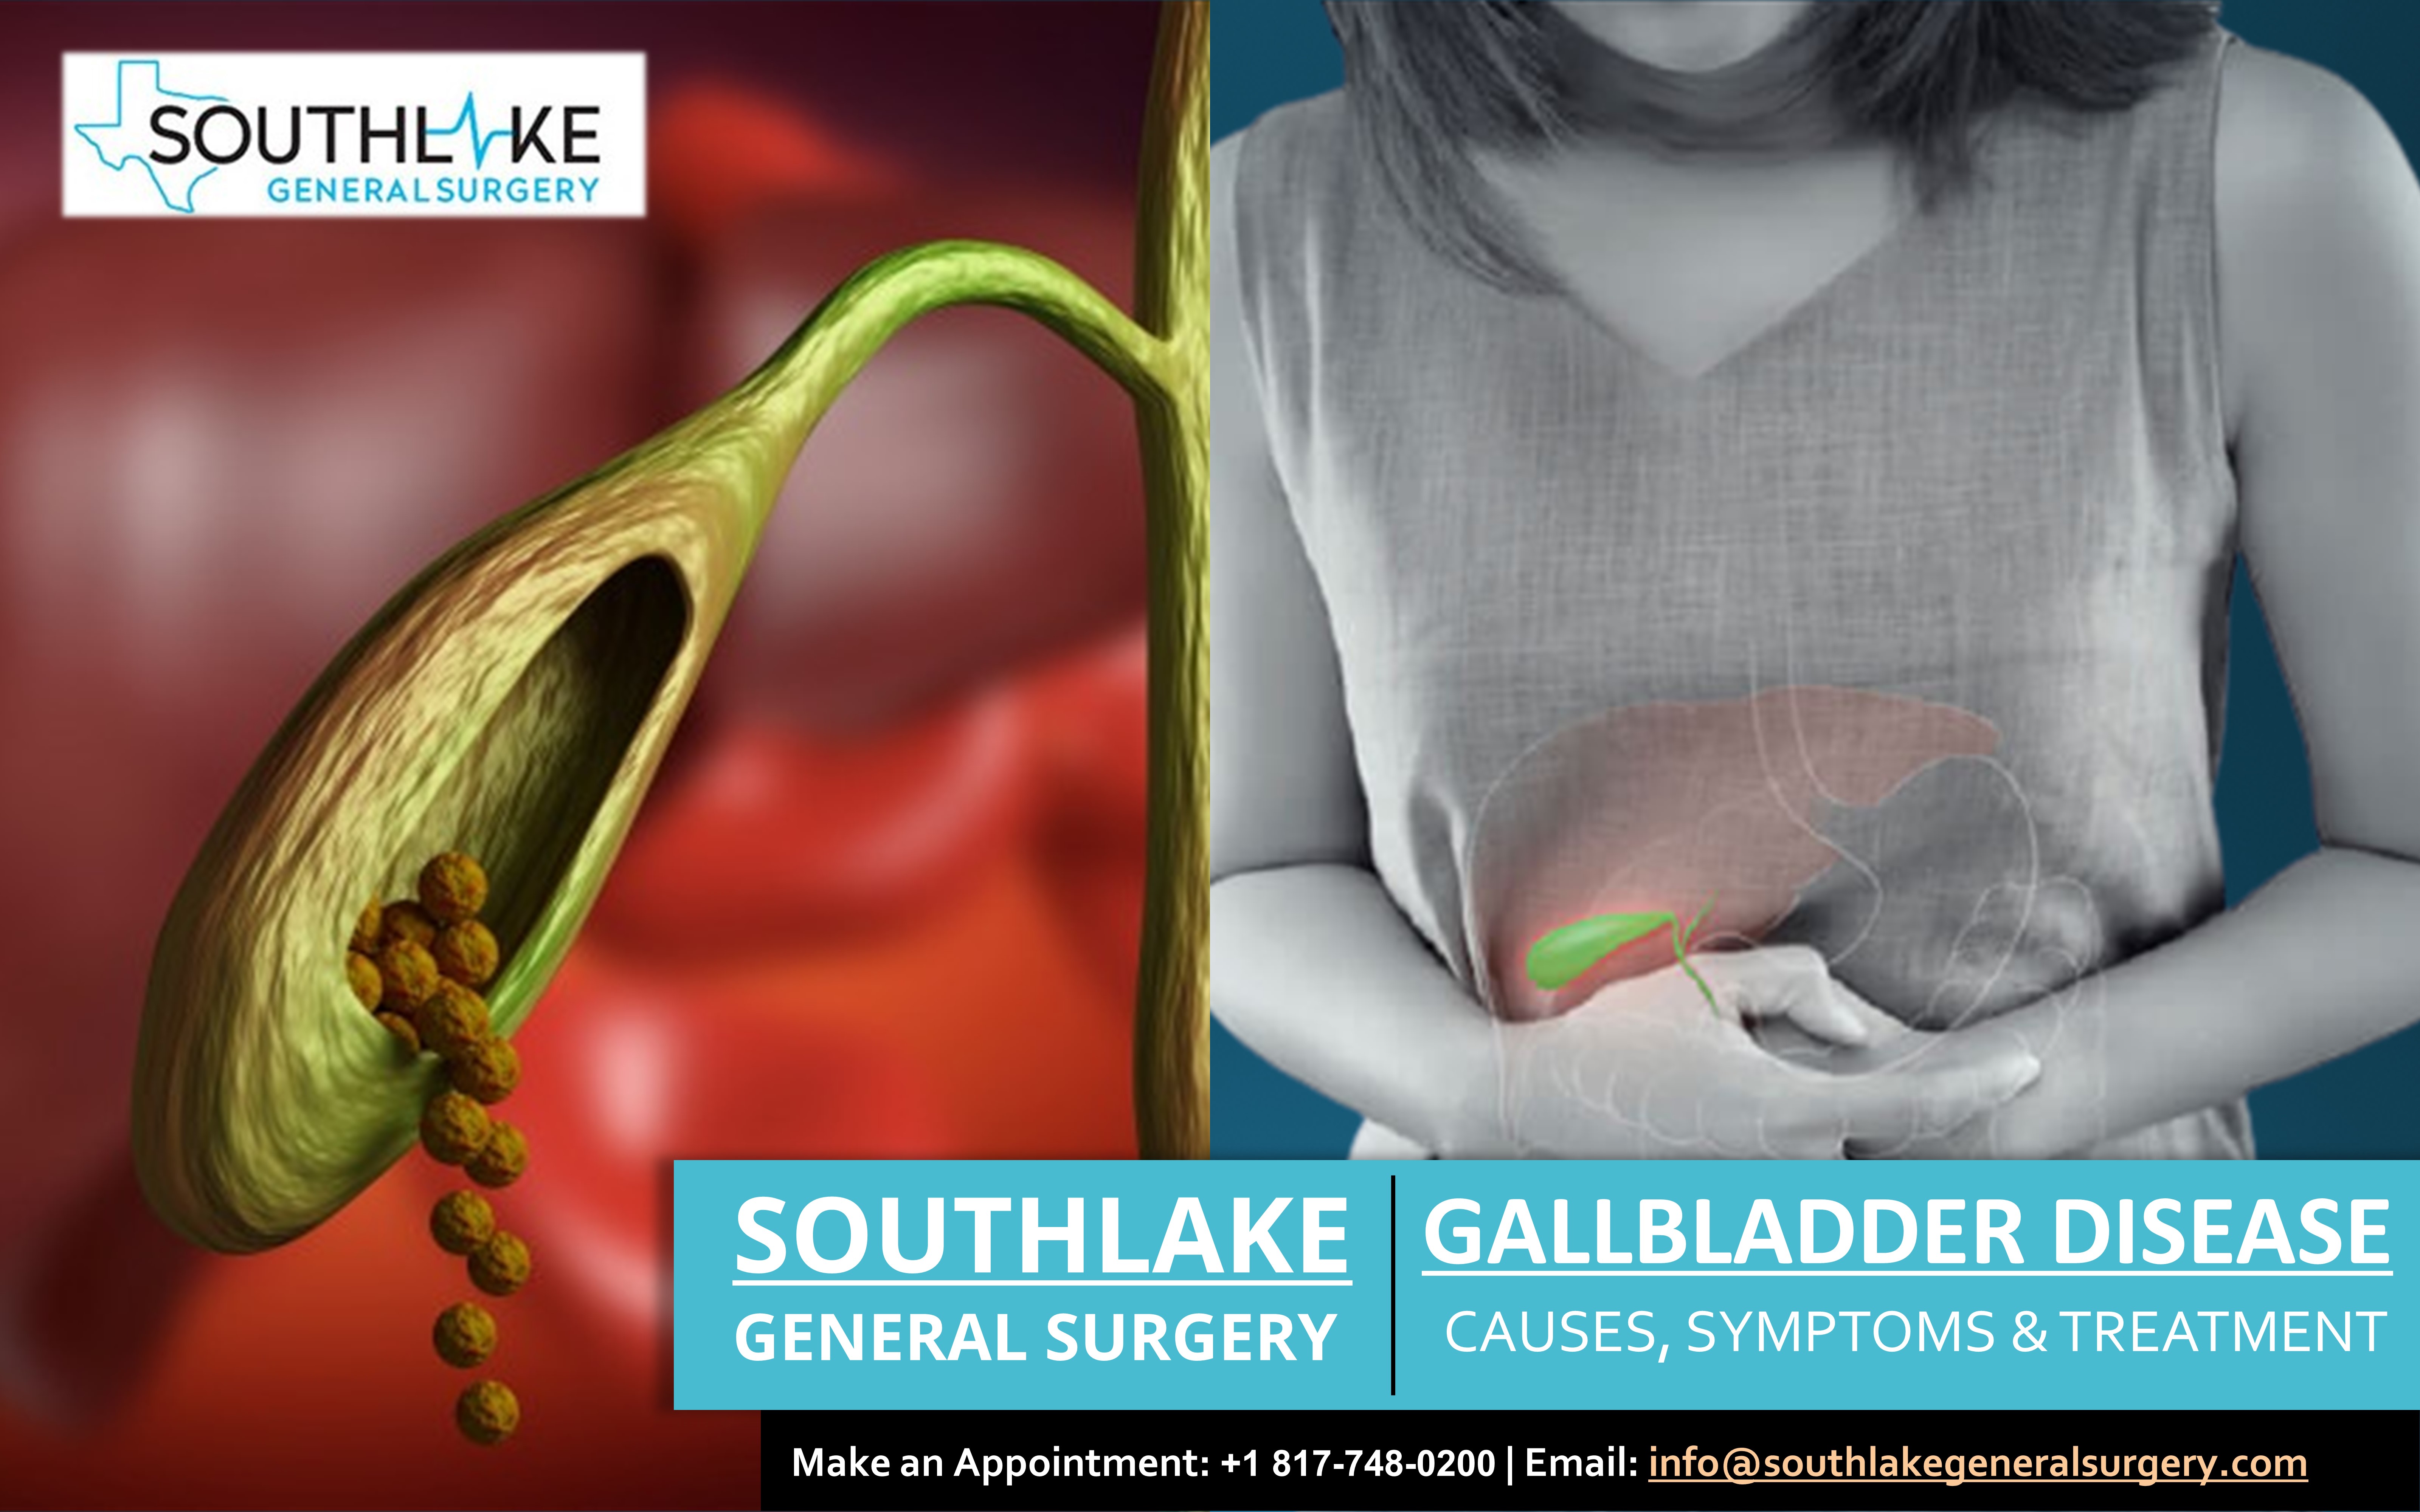 Gallbladder Disease & Treatment